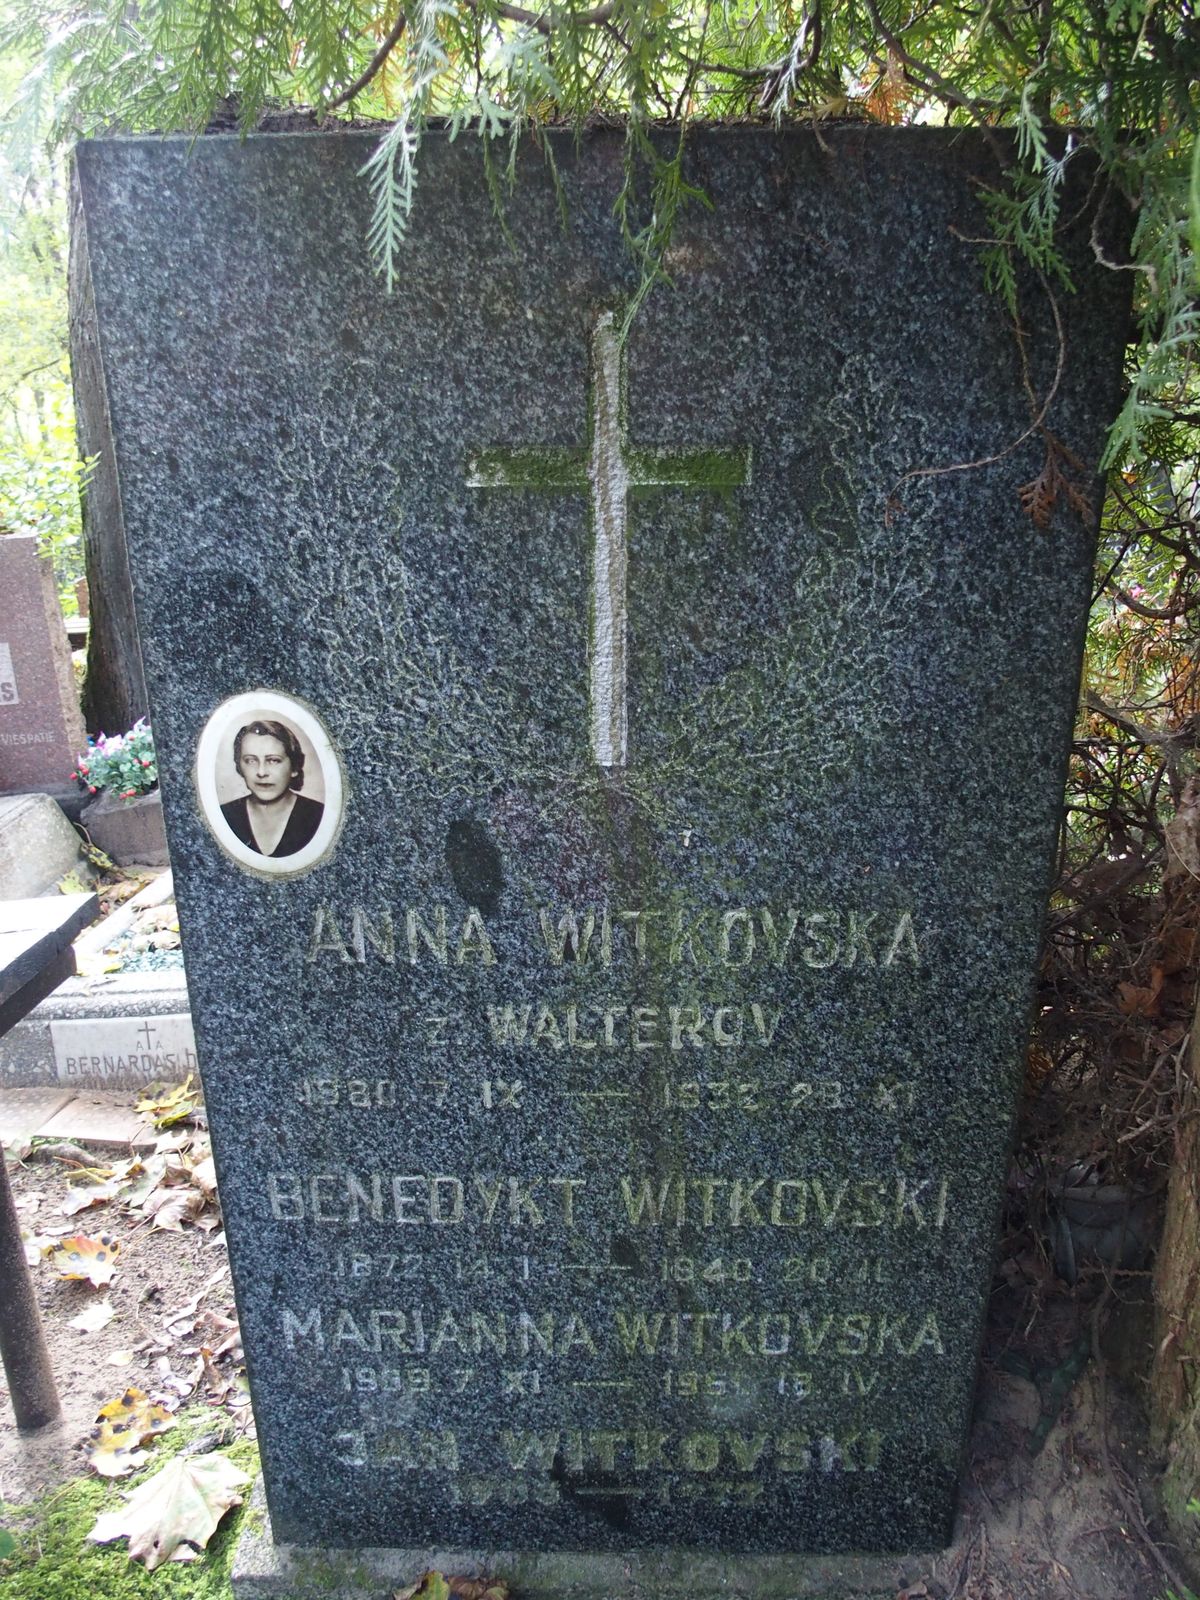 Tombstone of Anna Witkowska, Marianna Witkowska, Benedict Witkowski and Jan Witkowski, St Michael's cemetery in Riga, as of 2021.